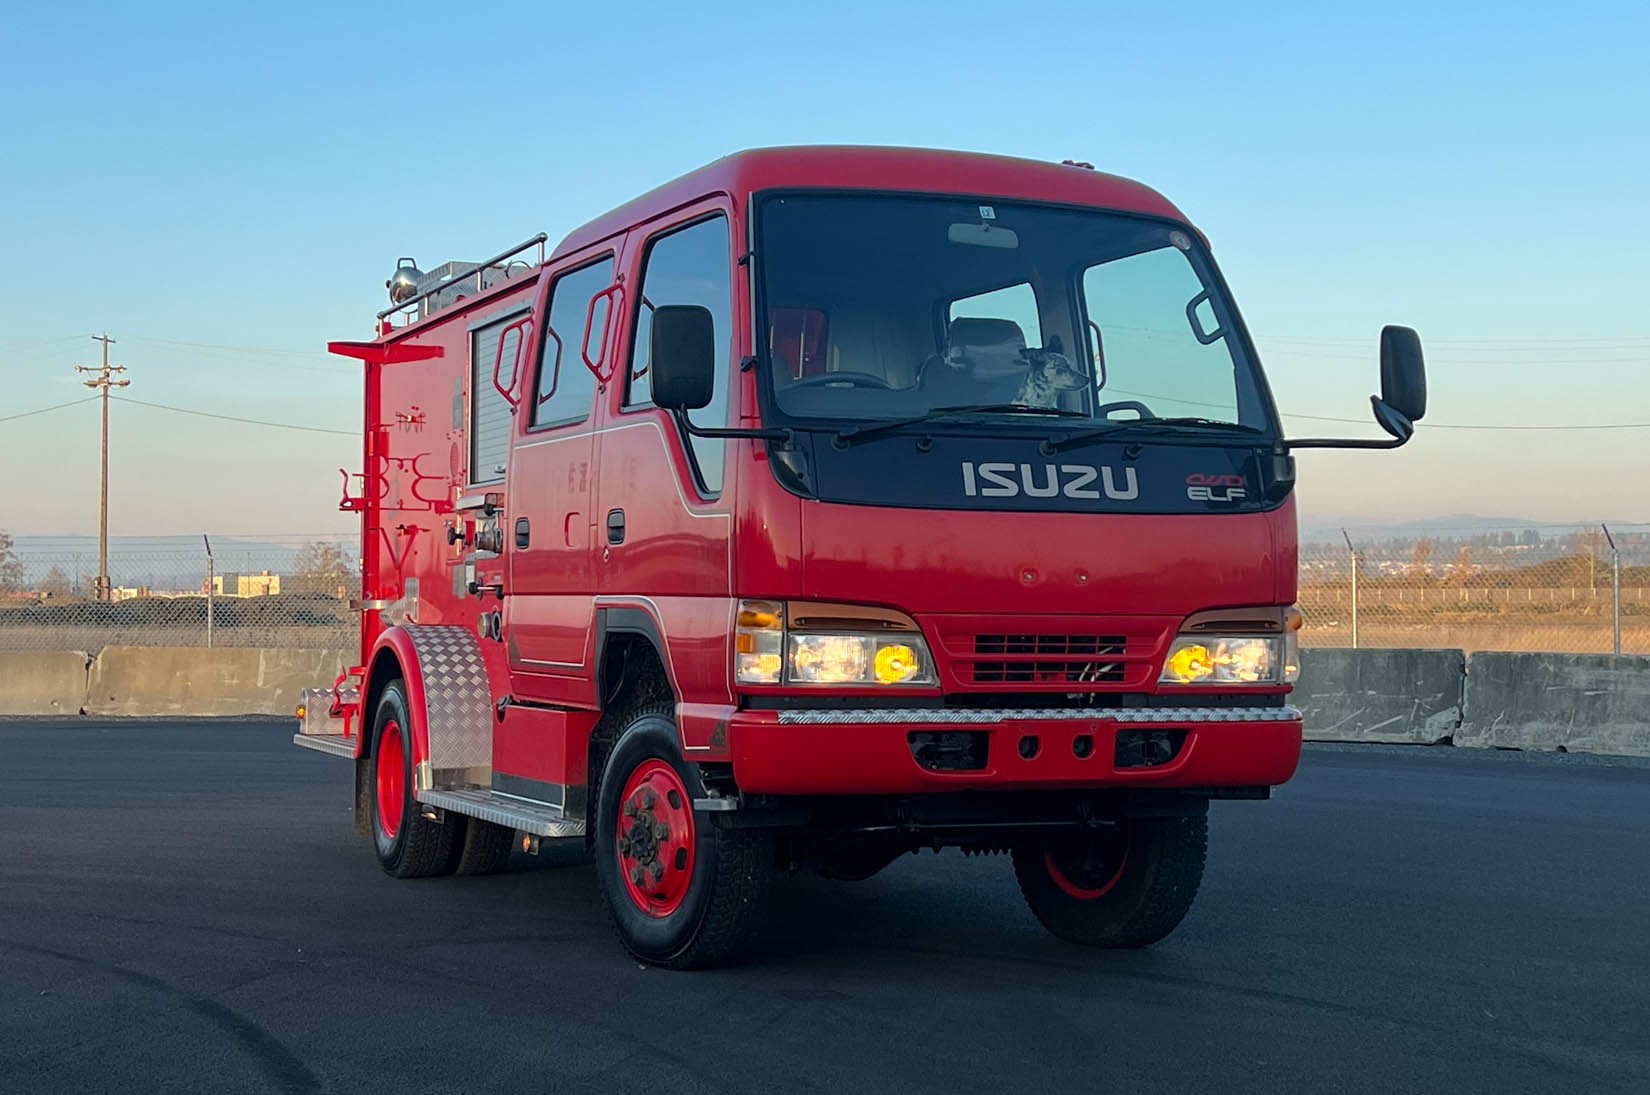 isuzu-elf-fire-truck-auction-06